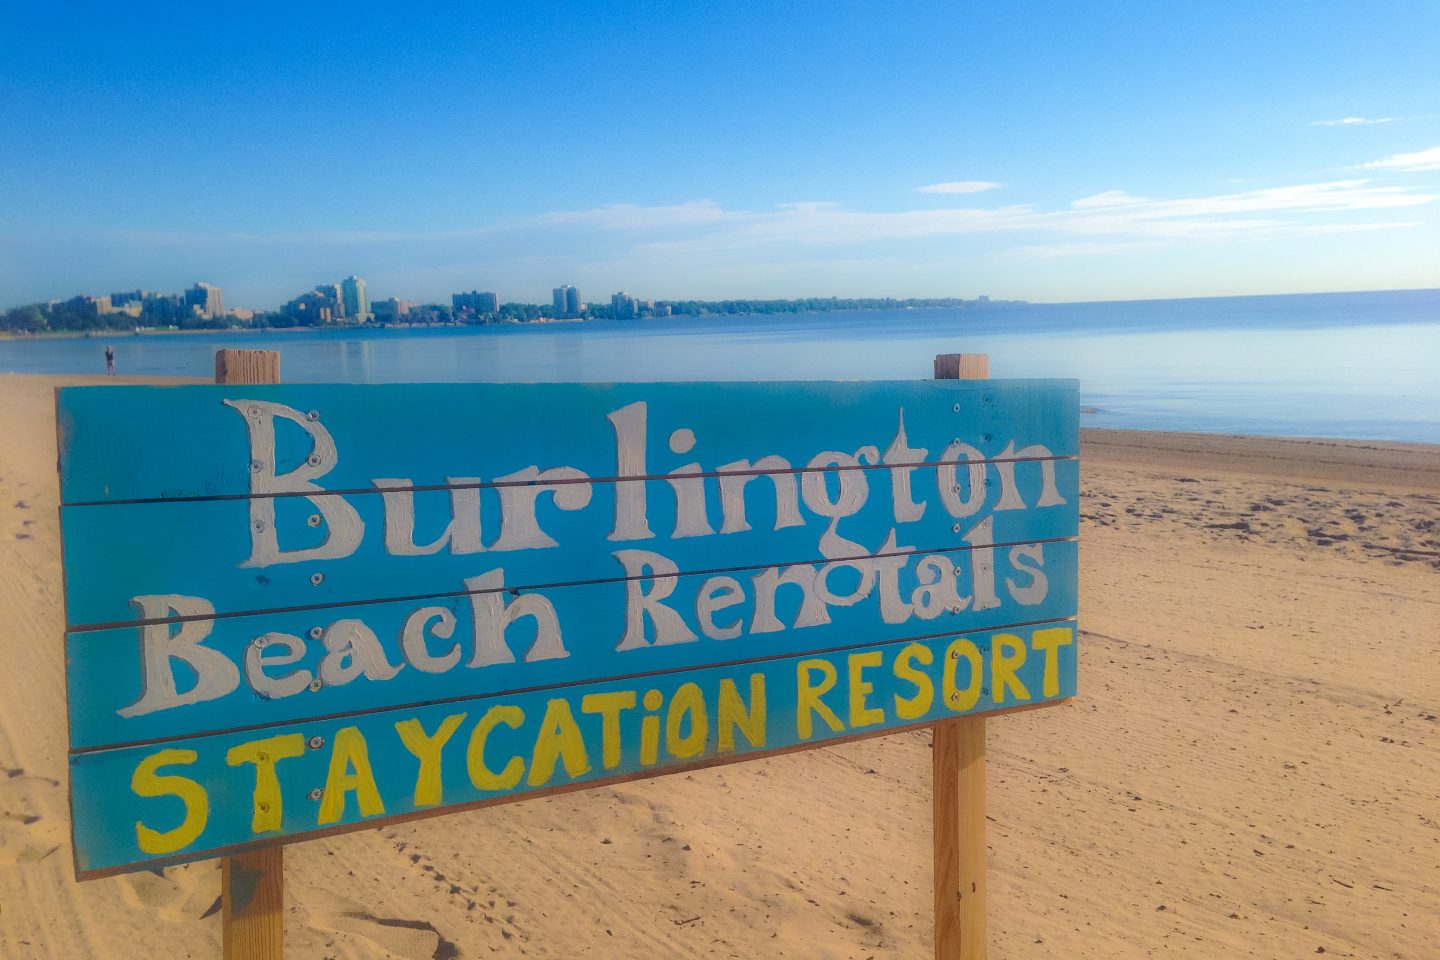 Burlington Beach Rentals